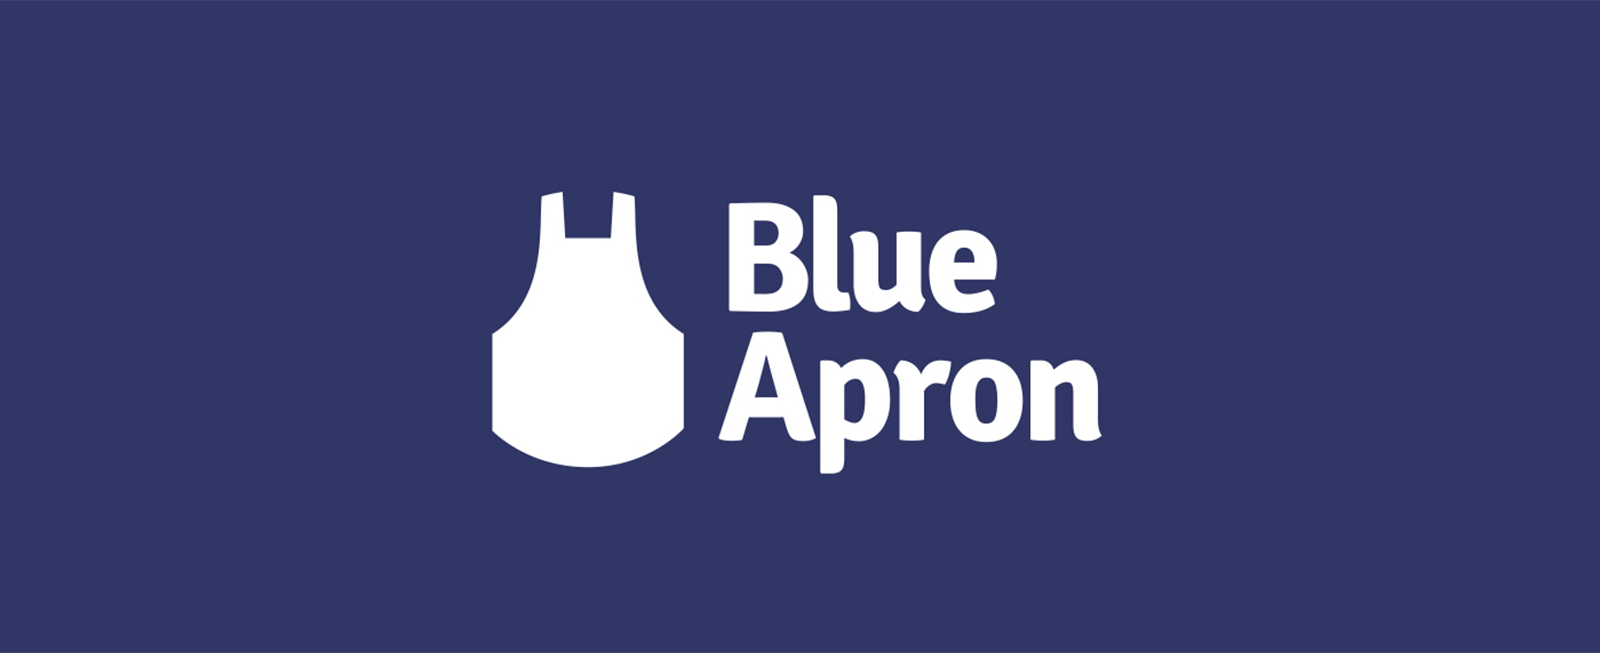 the blue apron